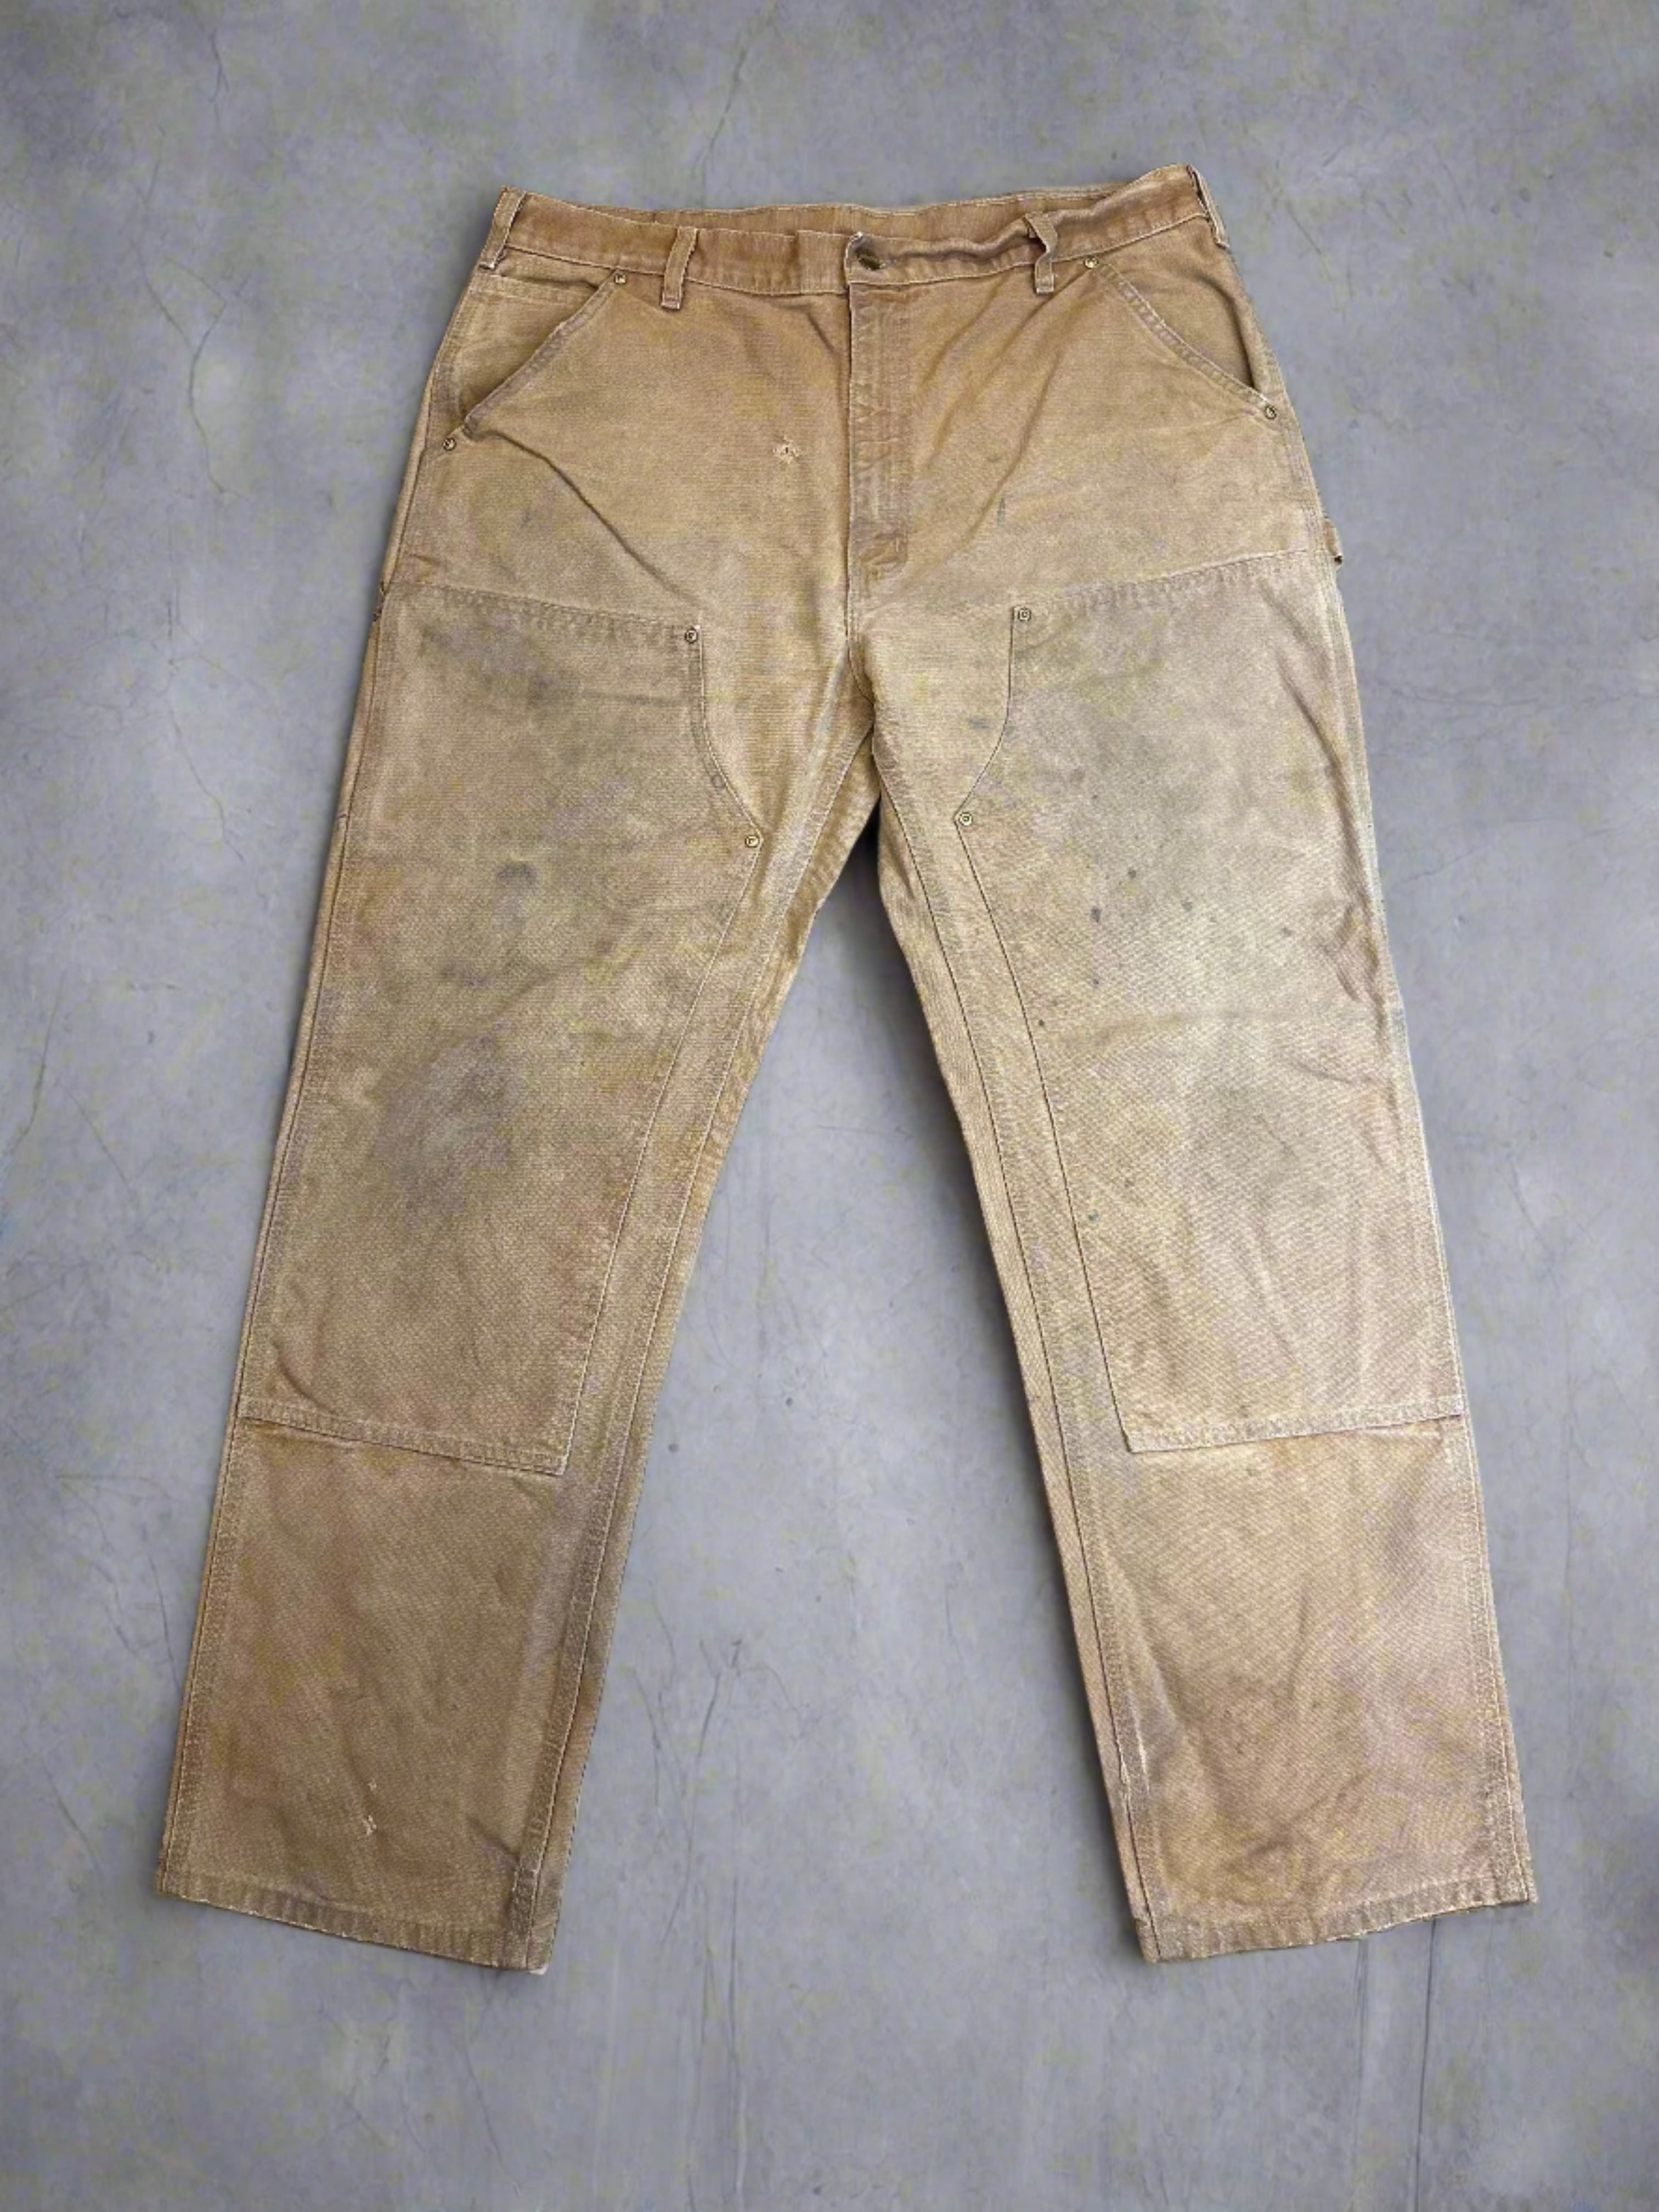 Vintage Carhartt Double Knee Pants - size 38x32